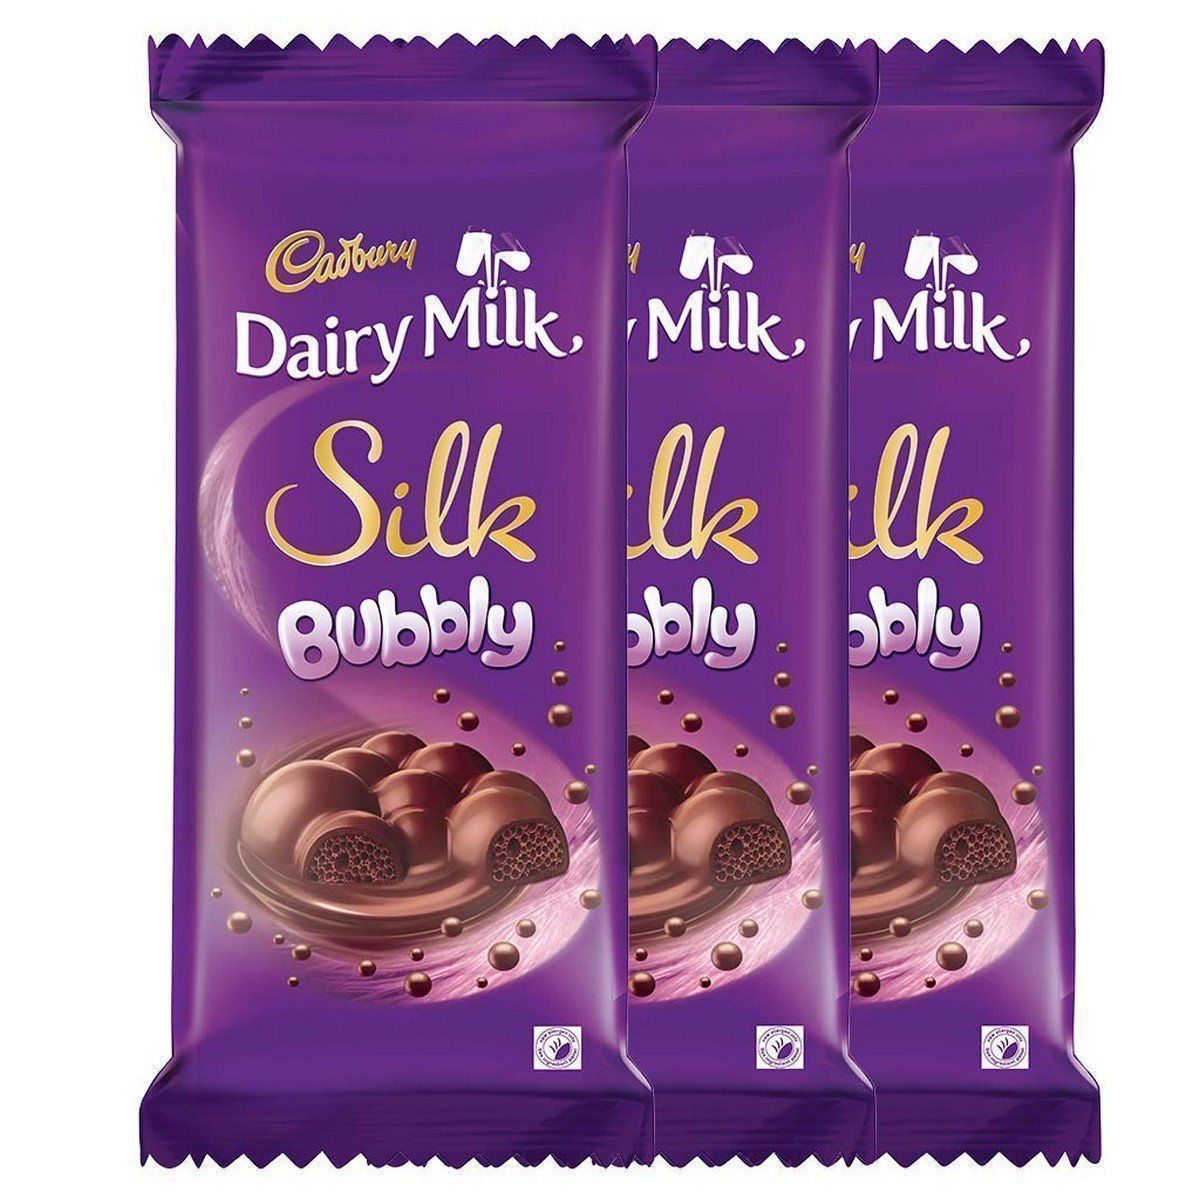 Cadbury Dairy Milk Silk, Bubbly, 120g (Pack of 3), Yummy!!!! Christmas Delight - $20.56